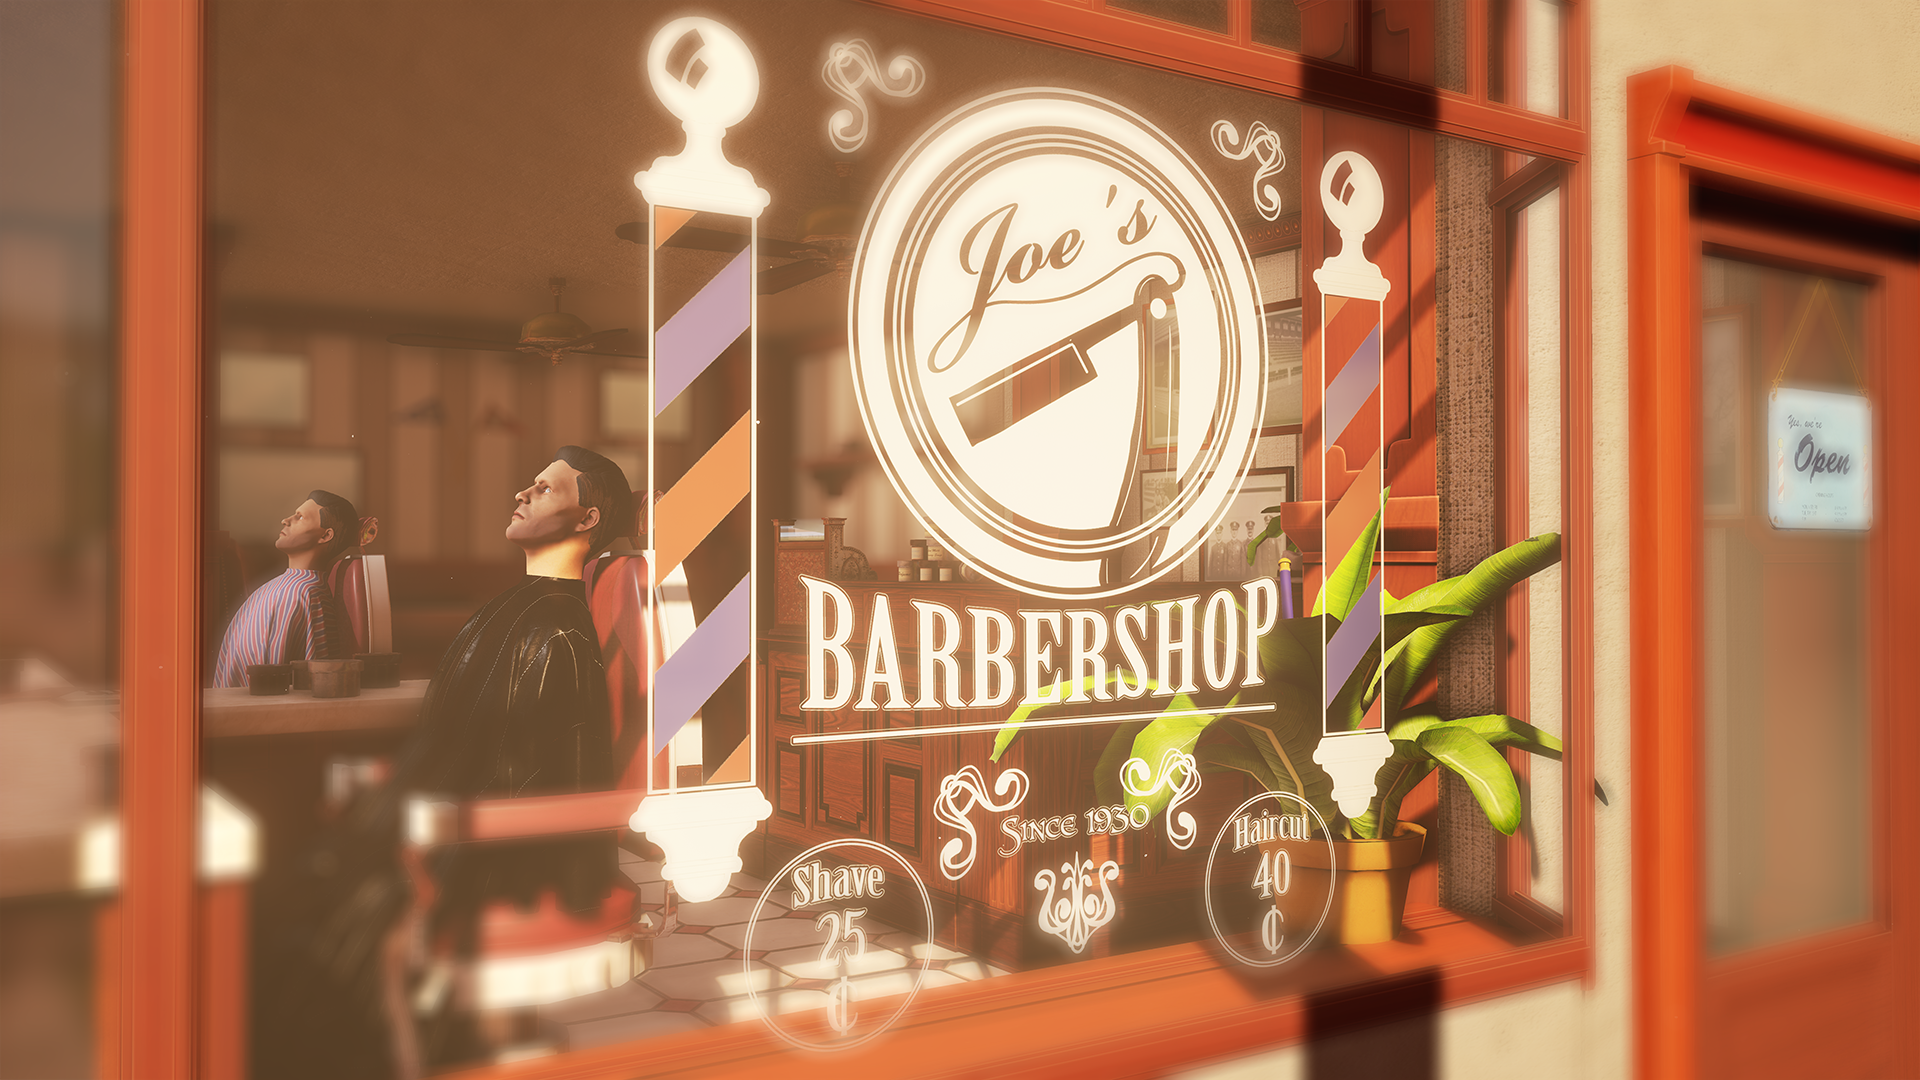 Barbershop Inc. - Game for Mac, Windows (PC), Linux - WebCatalog